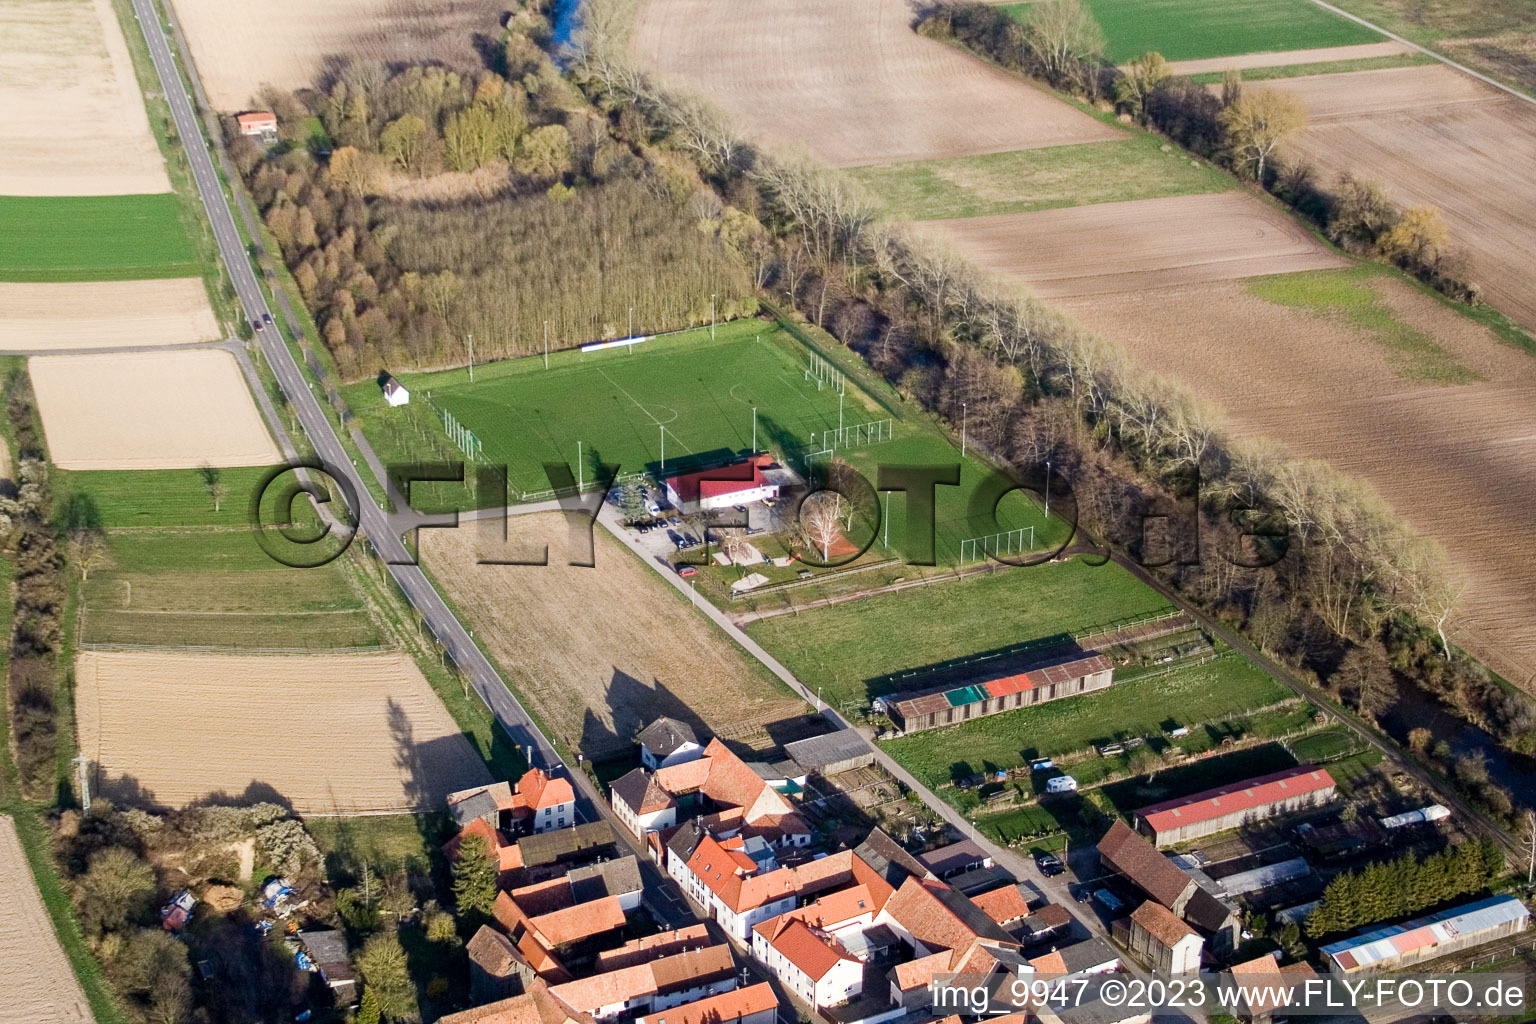 Herxheimweyher in the state Rhineland-Palatinate, Germany seen from above